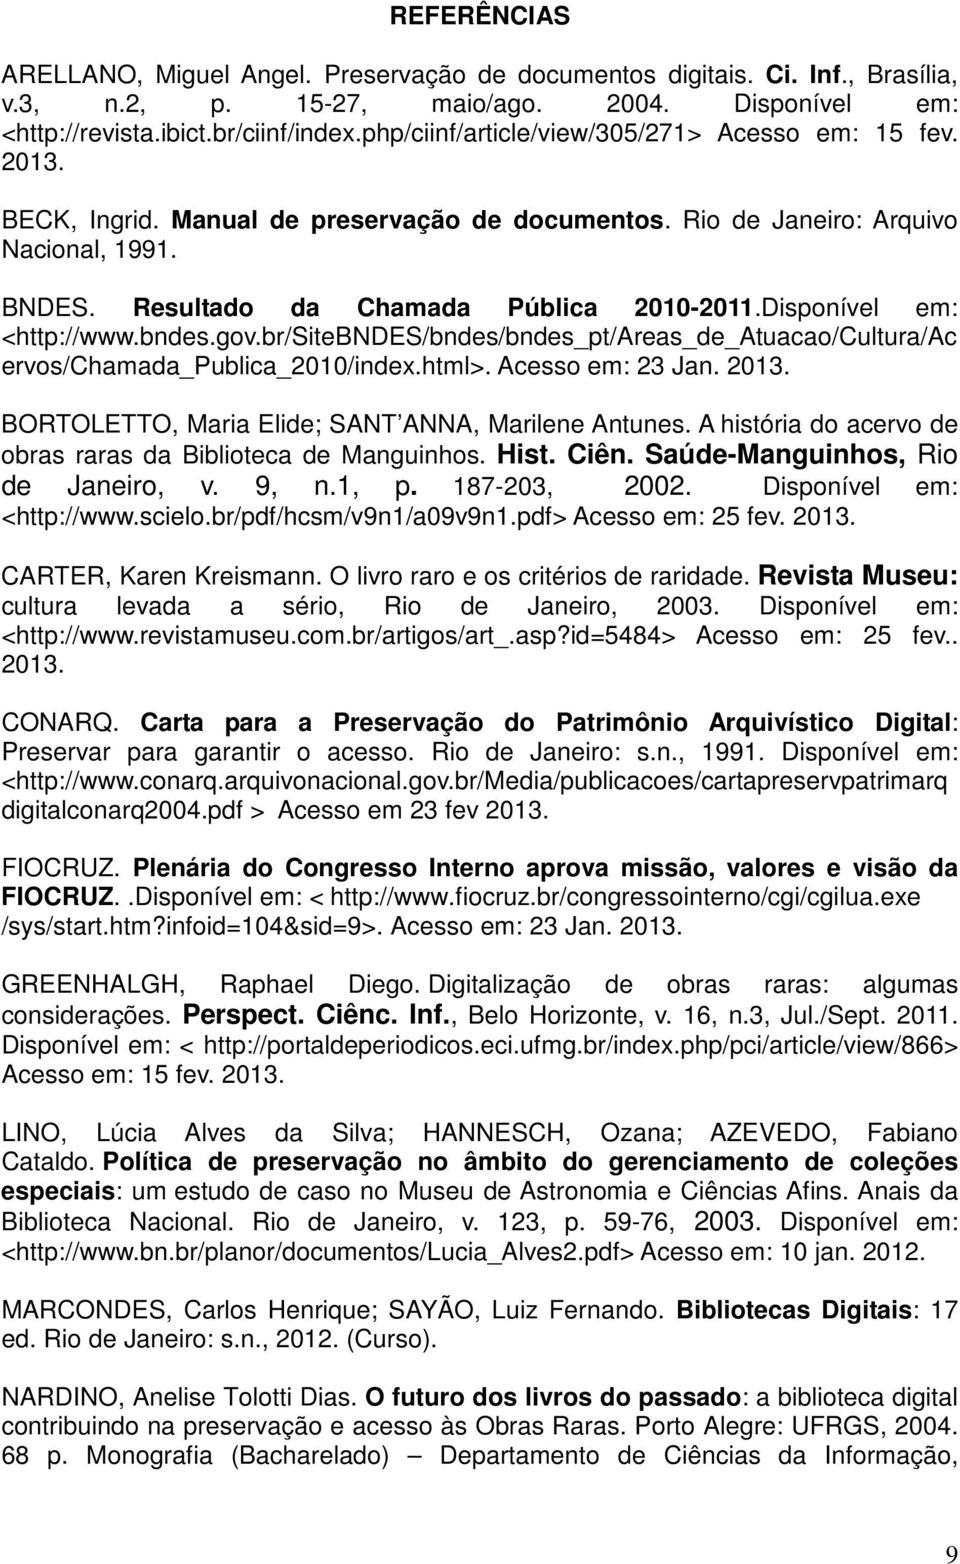 Disponível em: <http://www.bndes.gov.br/sitebndes/bndes/bndes_pt/areas_de_atuacao/cultura/ac ervos/chamada_publica_2010/index.html>. Acesso em: 23 Jan. 2013.